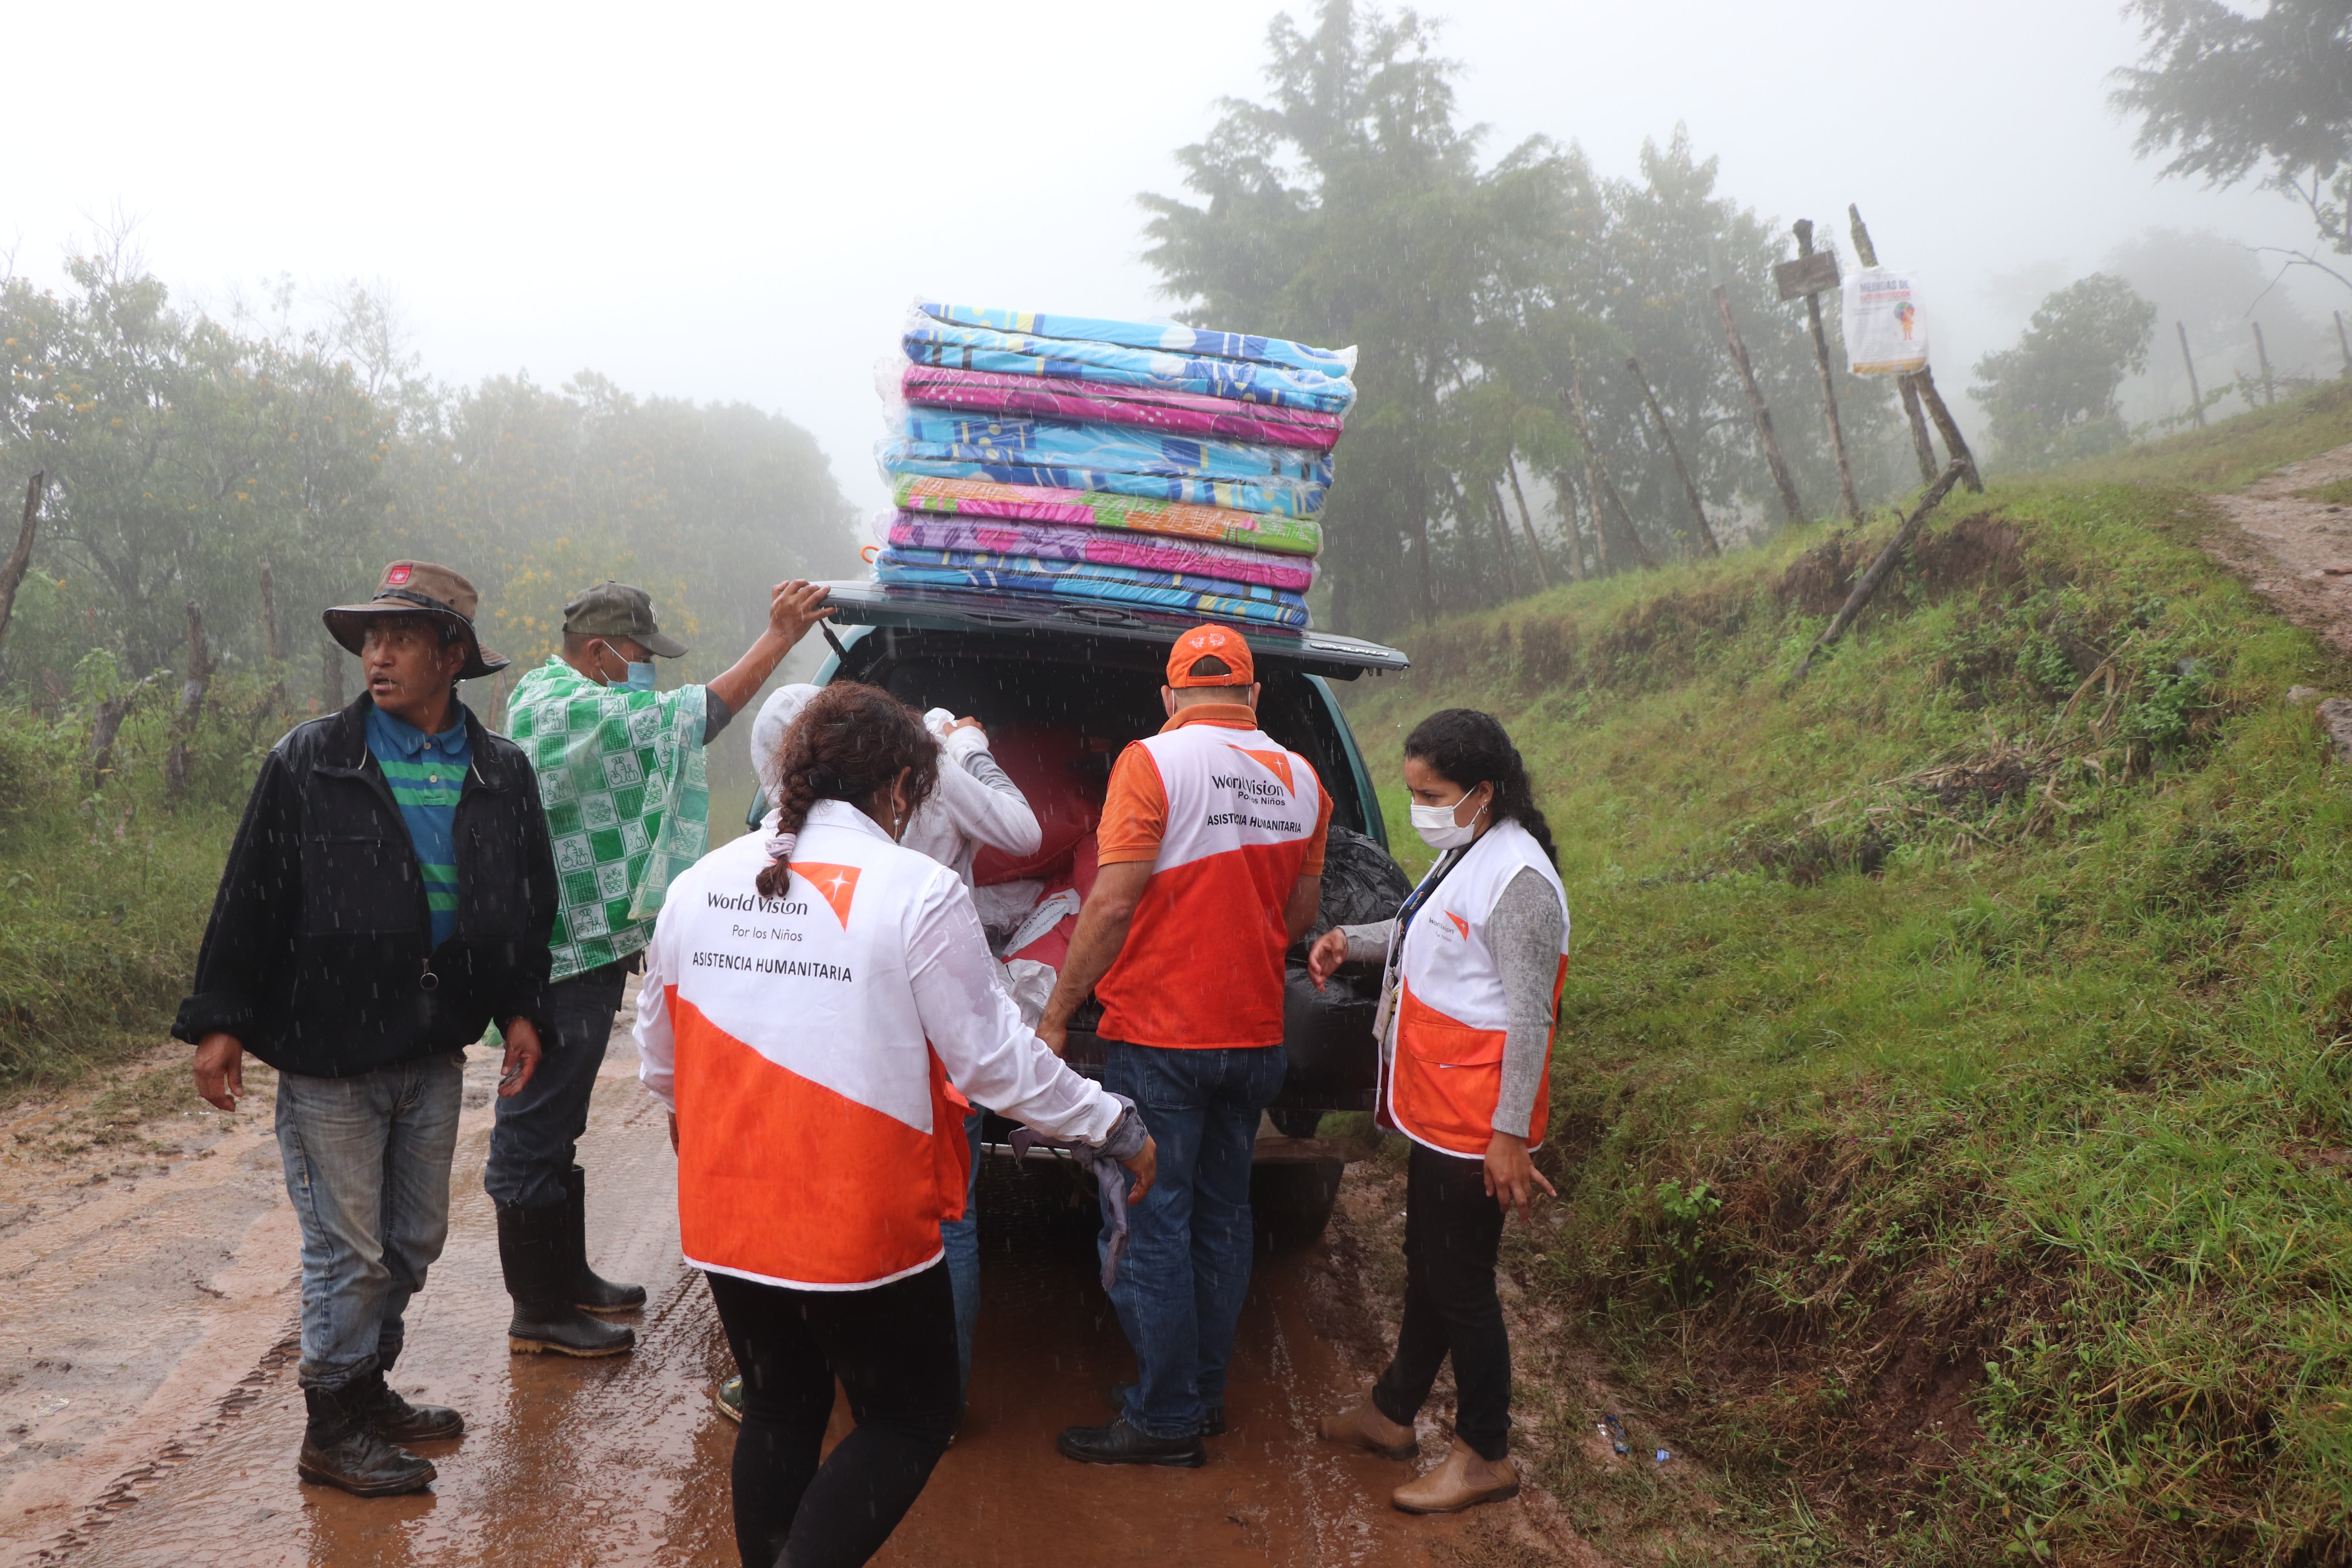 Staff & volunteers navigate dangerous conditions to reach remote communities